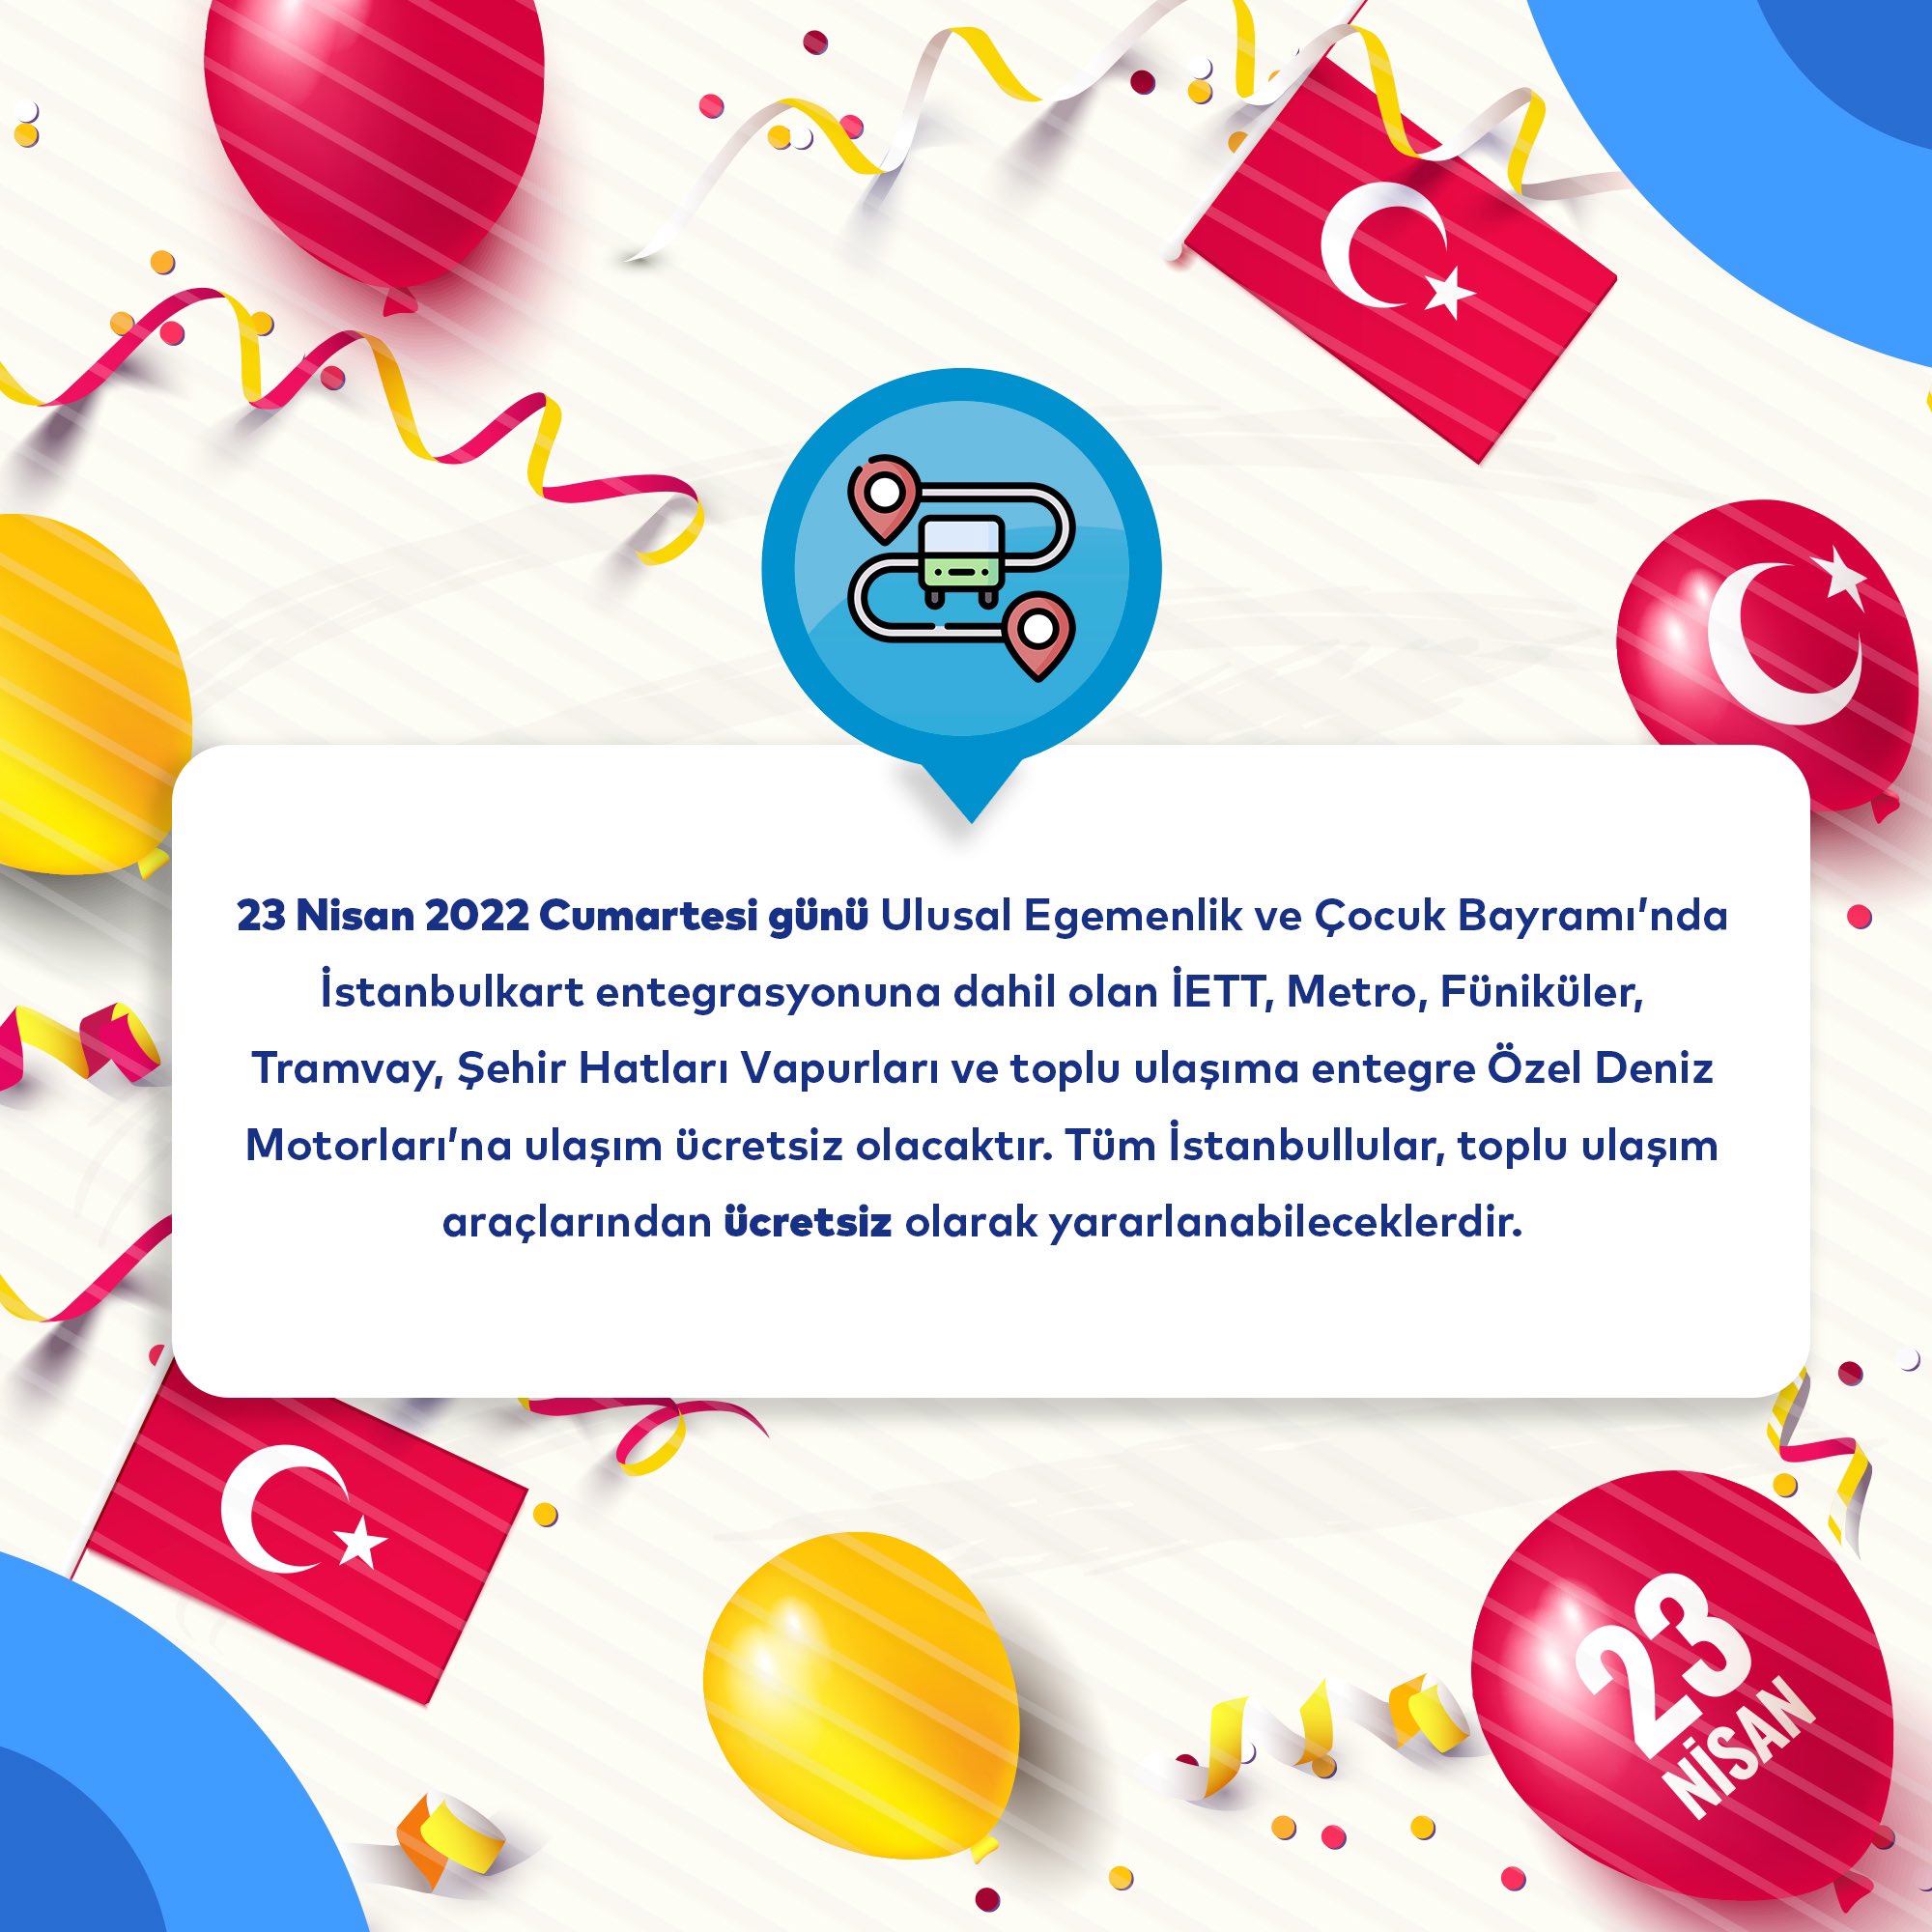 23 Nisan 2022 Cumartesi toplu taşıma bedava mı? 23 Nisan'da İETT, metro, tramvay, Marmaray, ücretsiz mi?